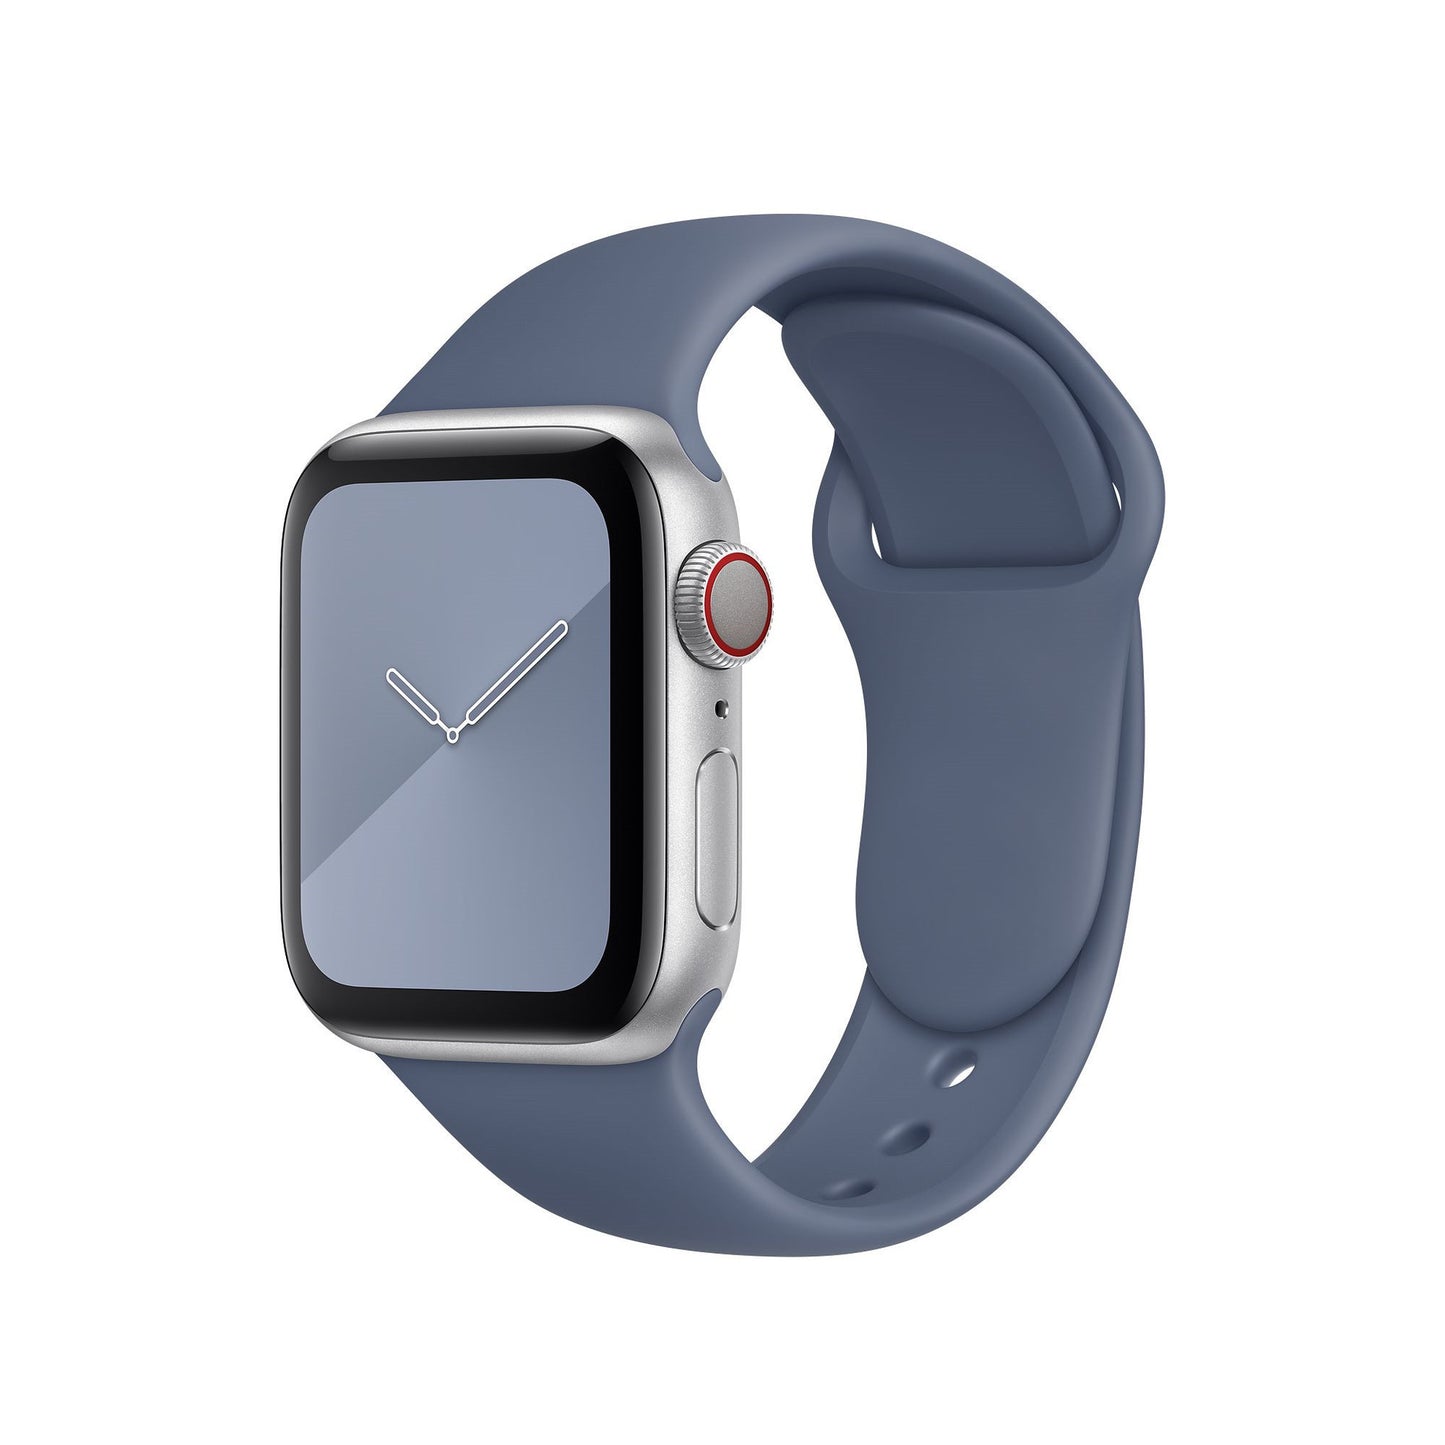 Apple Watch Silikon Armband für 3 4 5 6 7th Generation